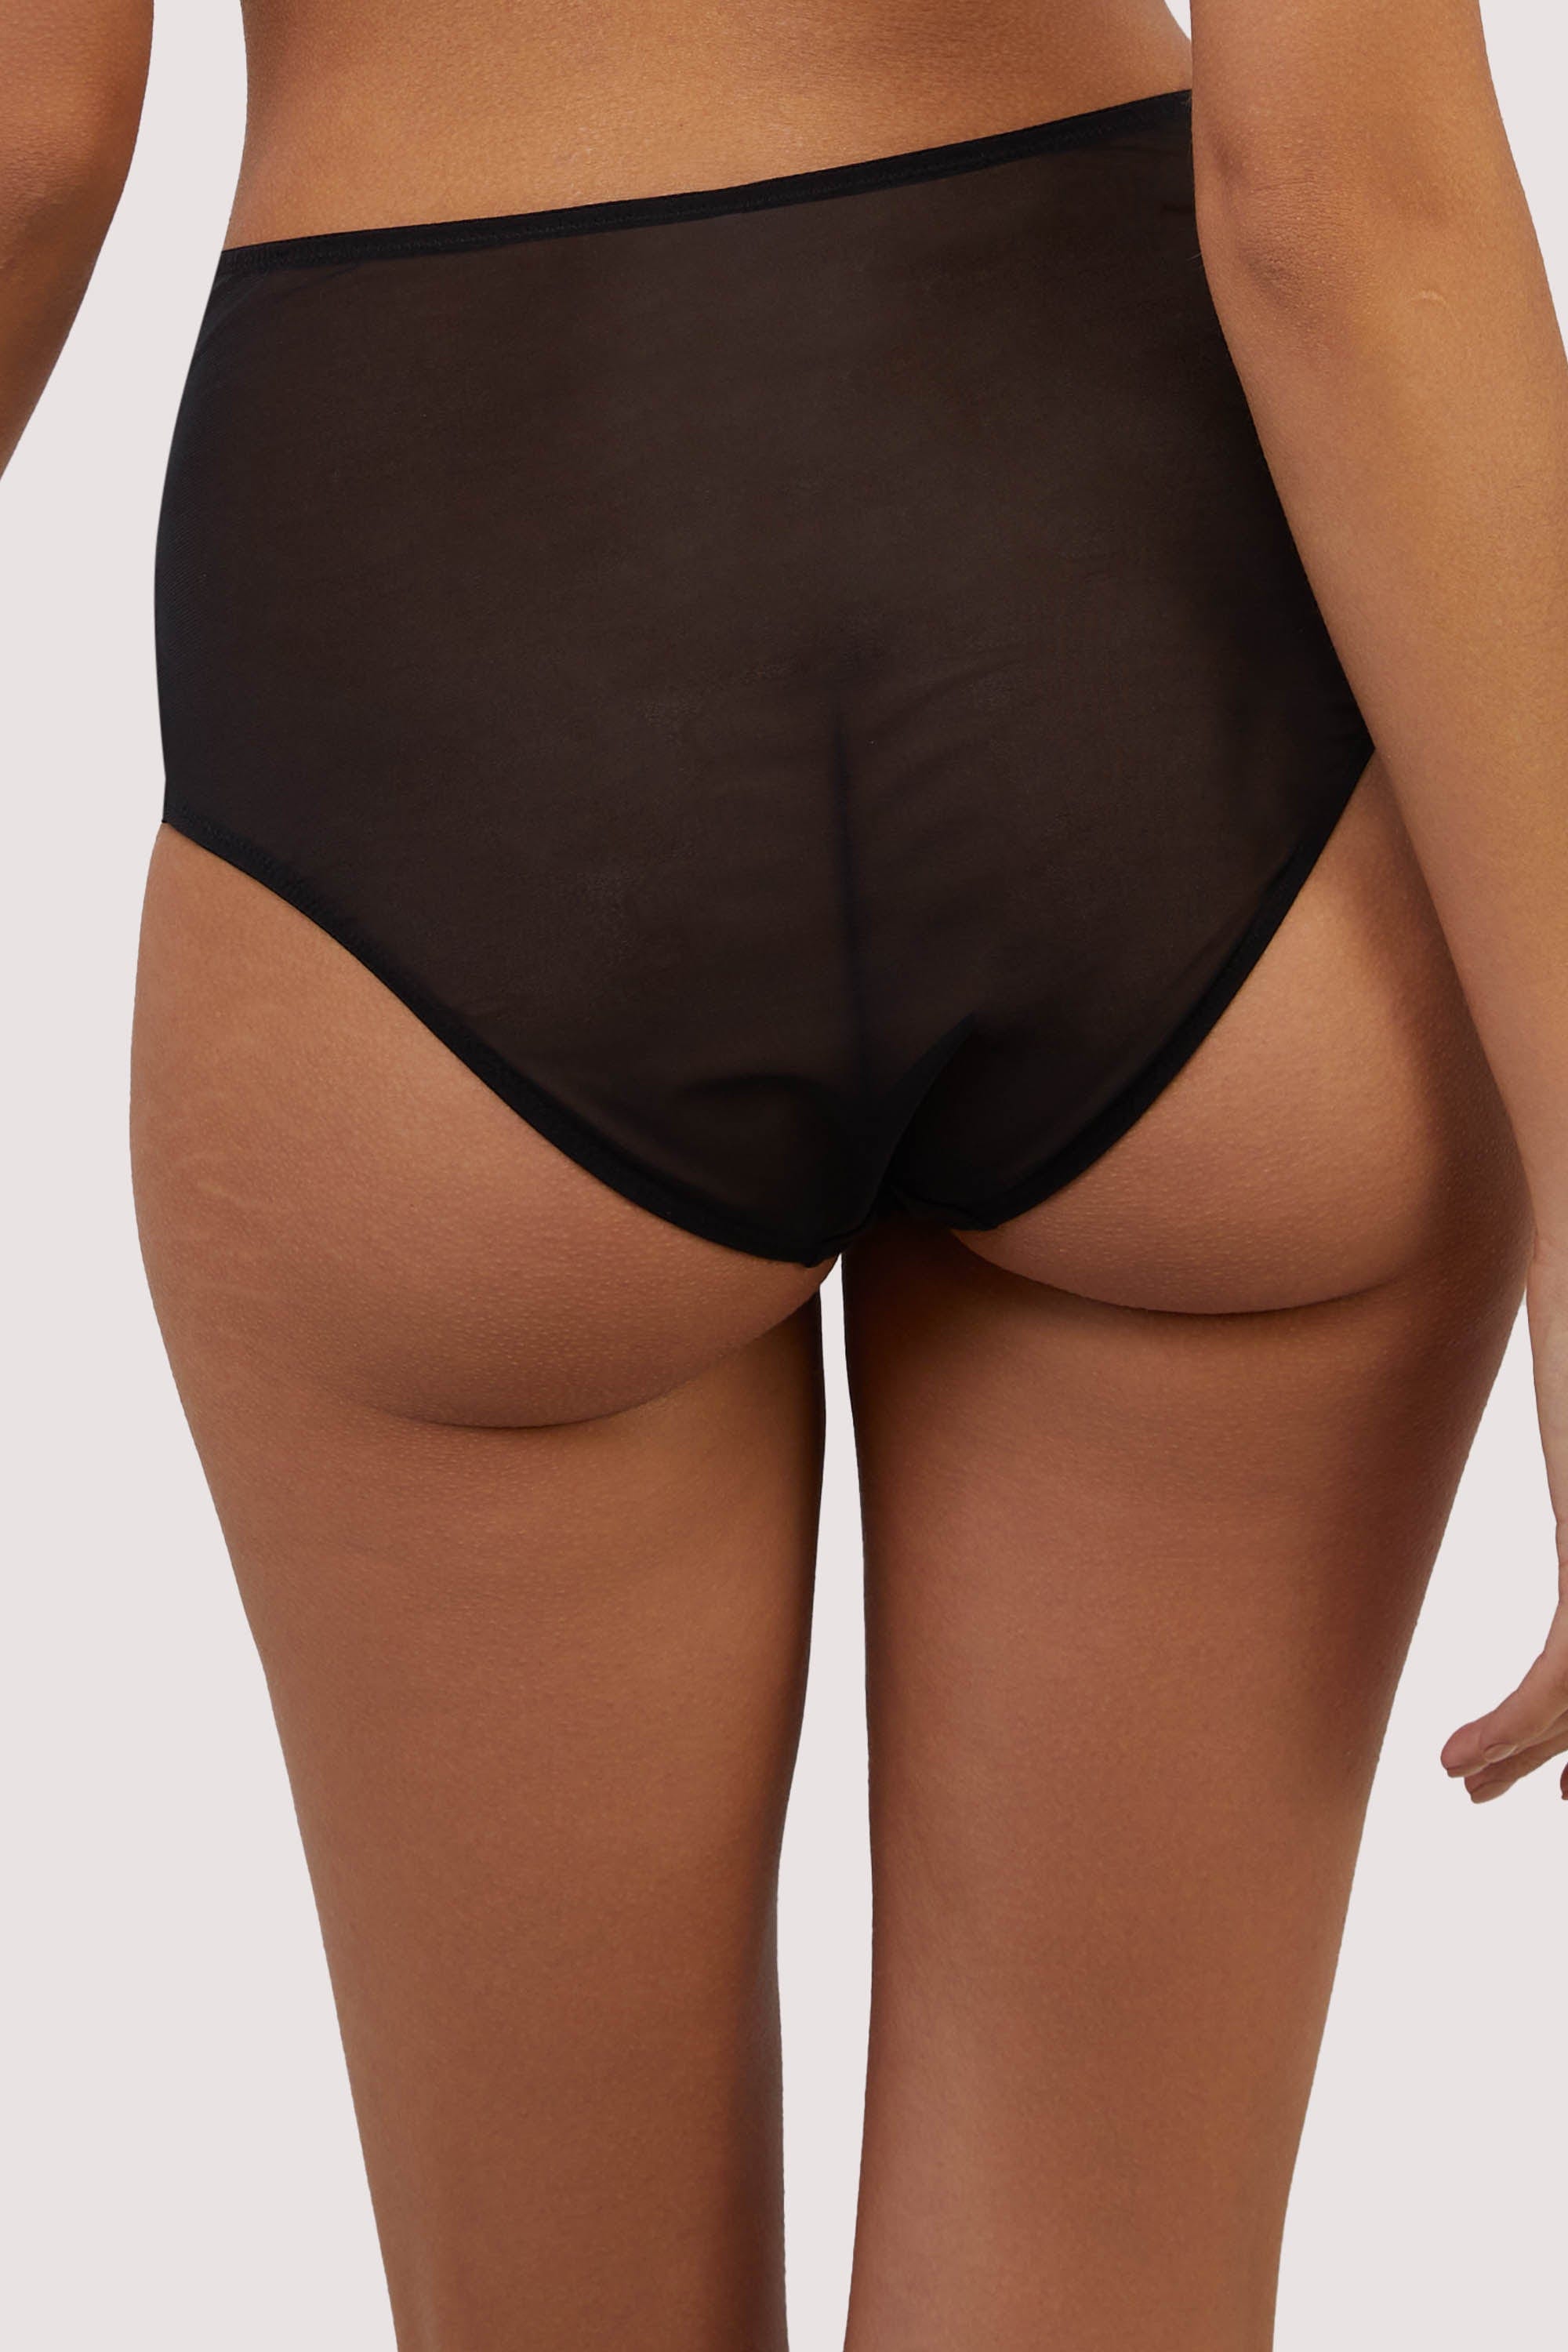 model shows black sheer high-waisted brief back